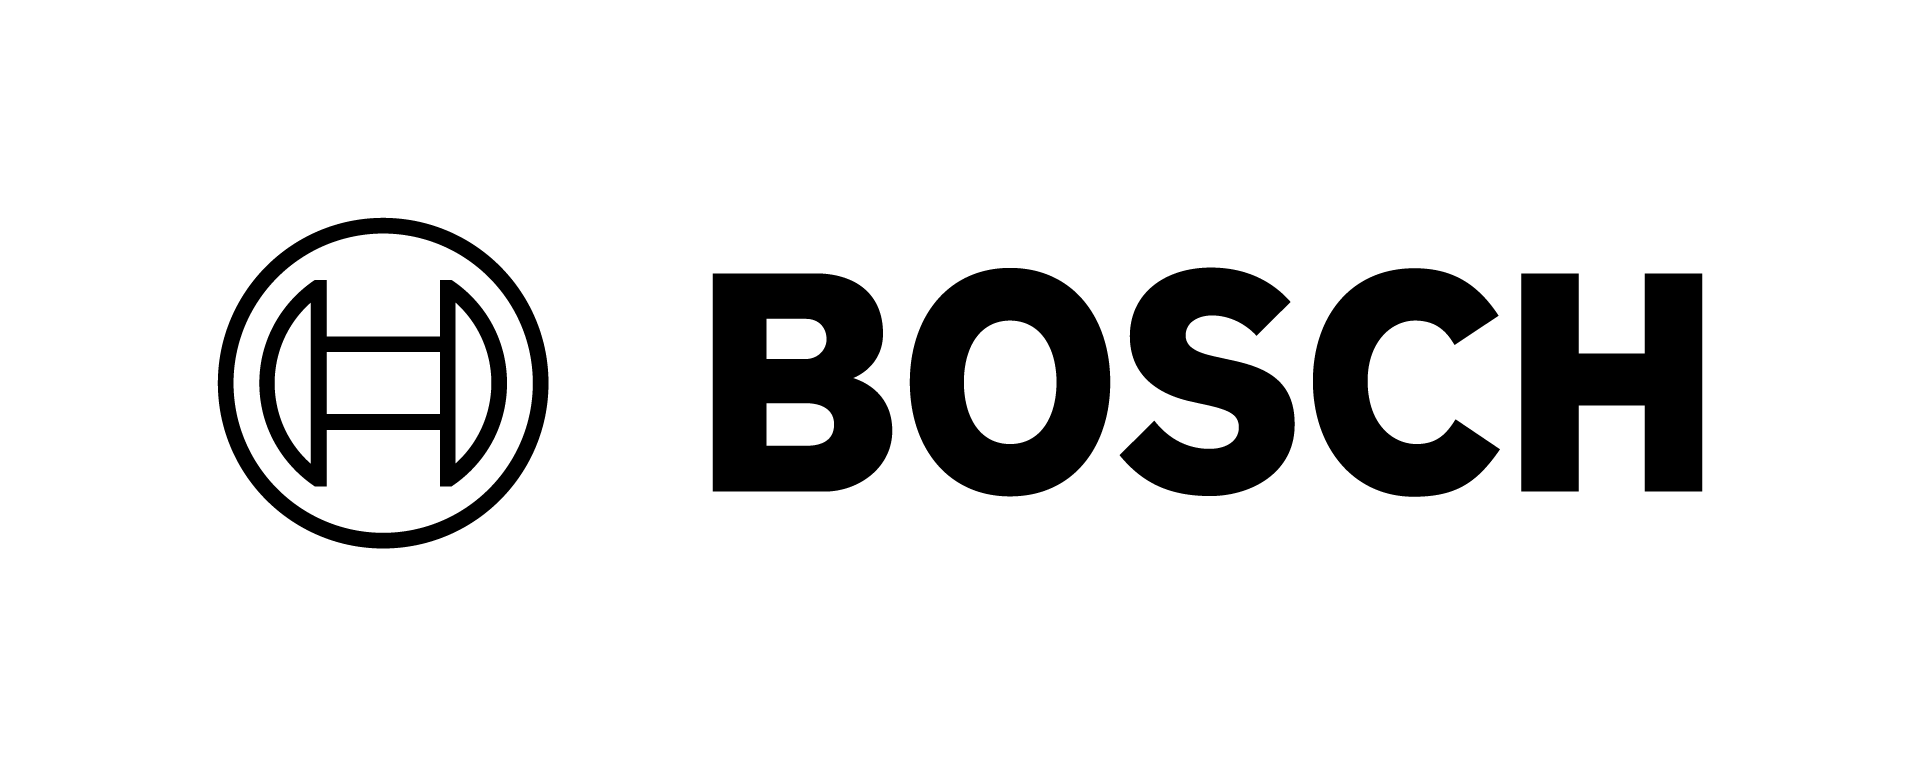 Bosch_symbol_logo_black